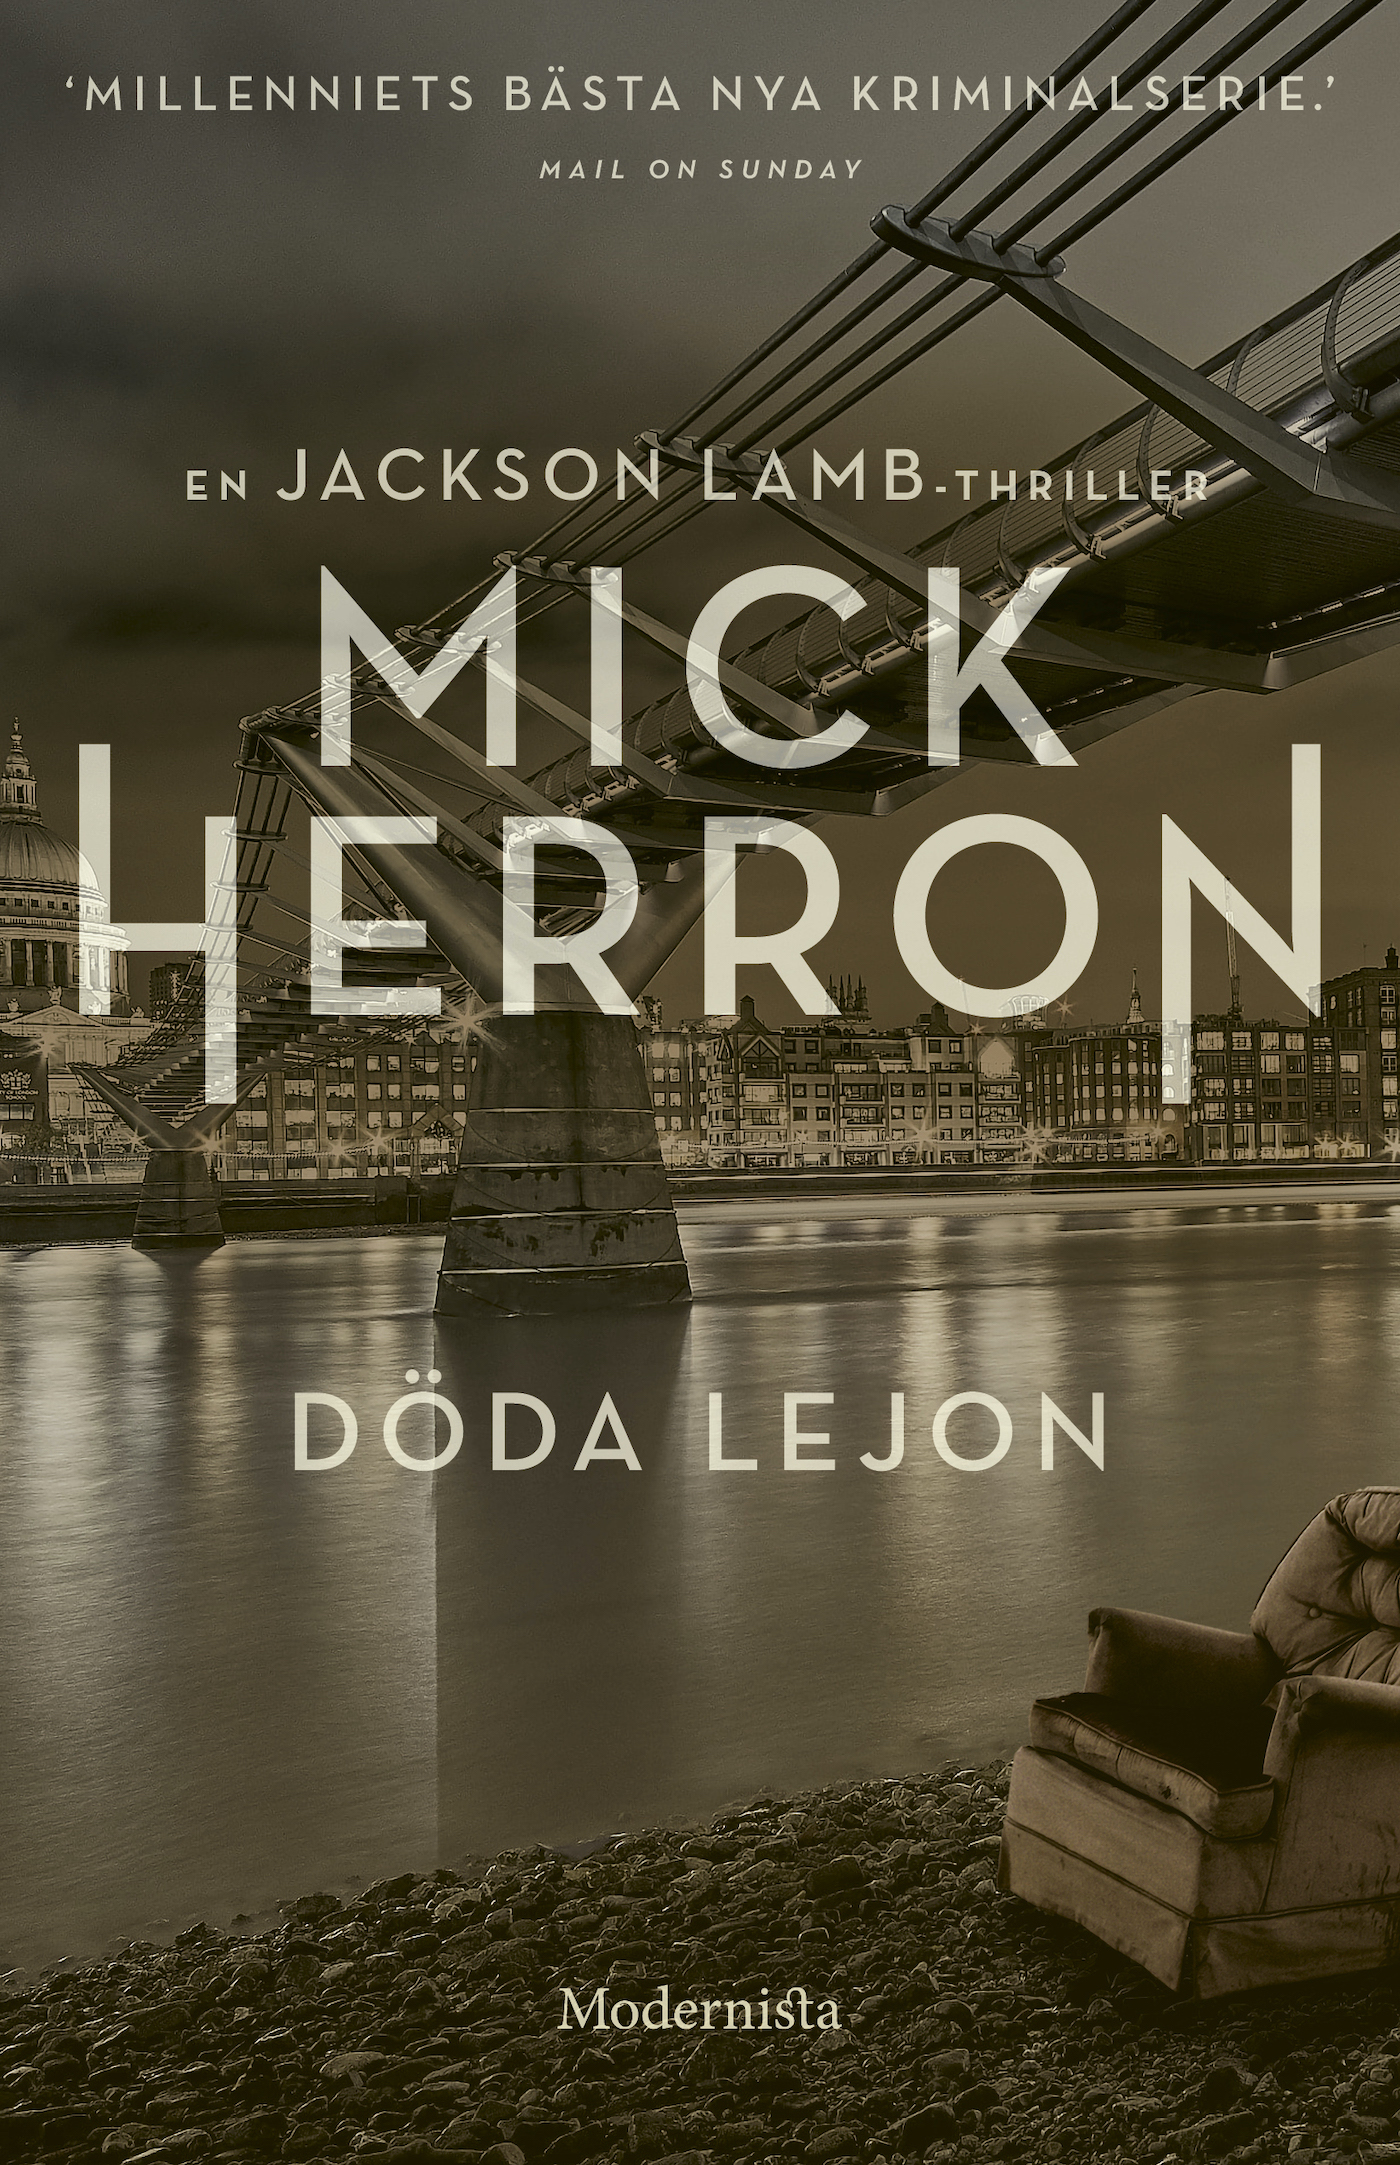 Döda Lejon (EBook, Swedish language, 2013, Modernista)